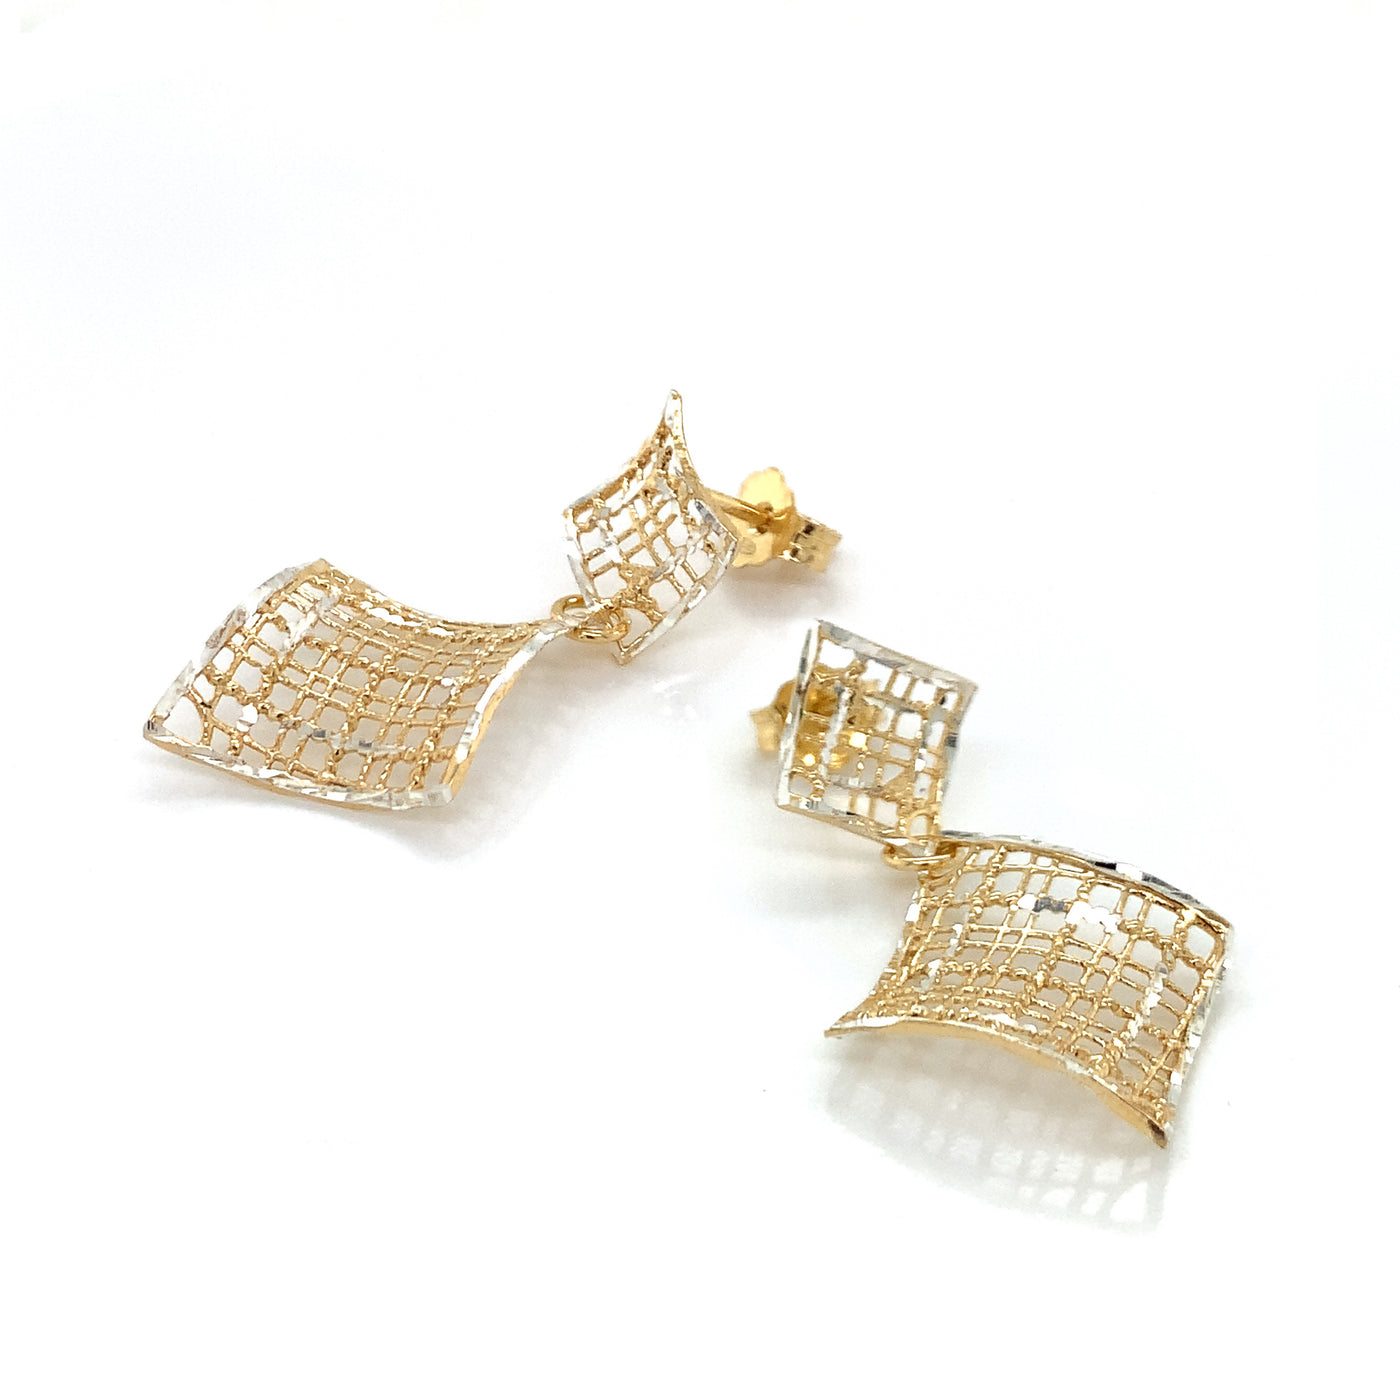 IL Diletto - 925 Italian Silver Earrings, Filigree Rhombus Drop, Gold Plated